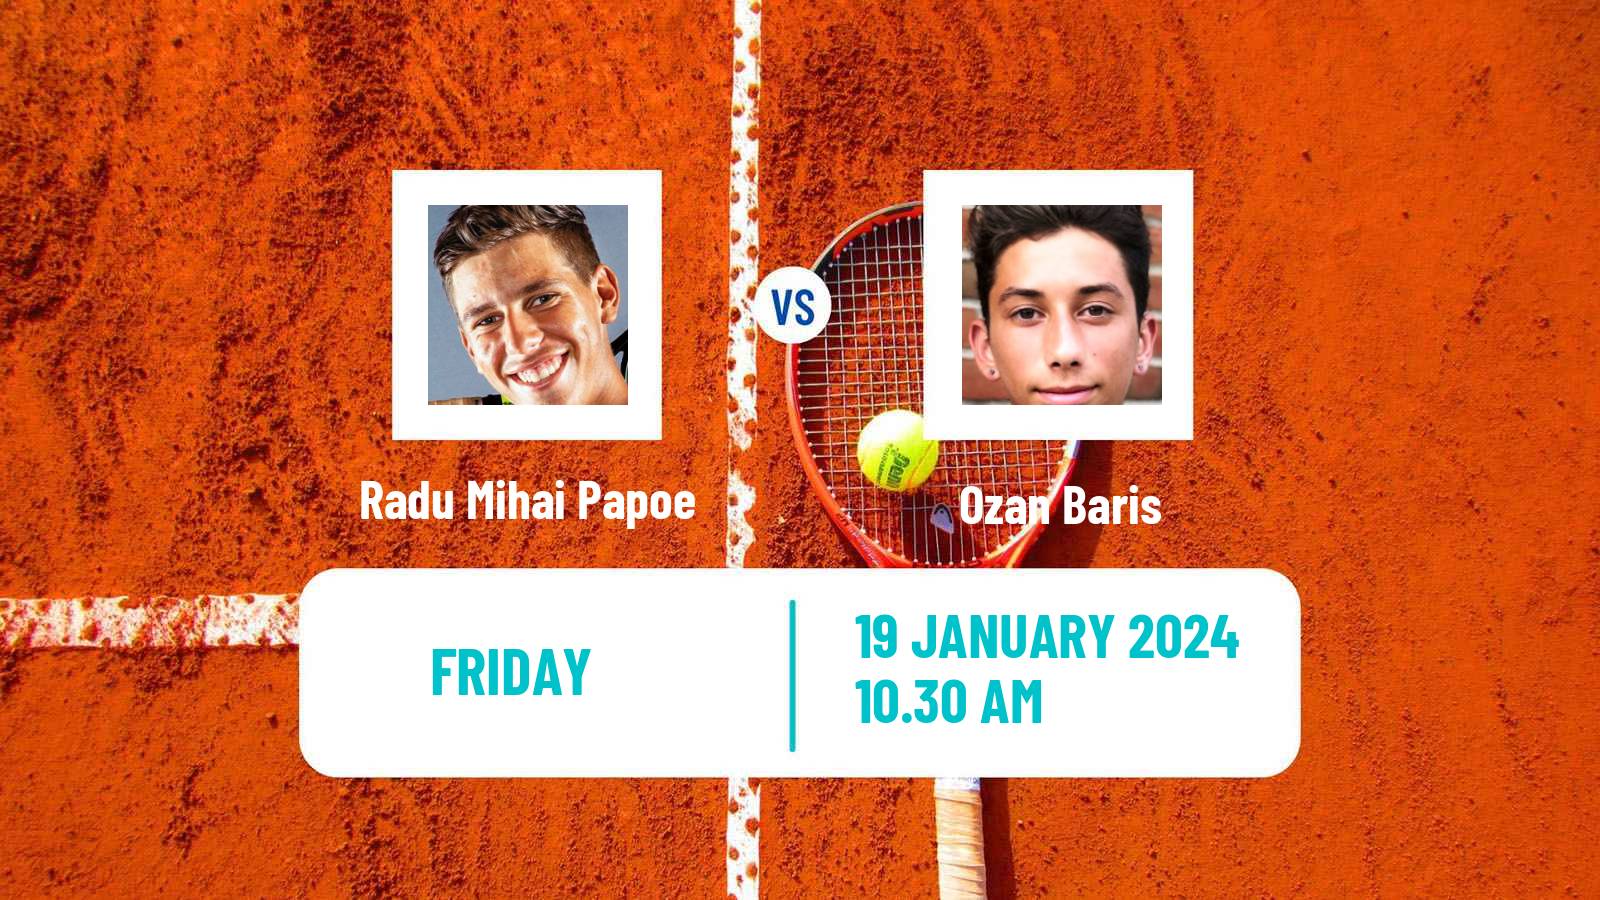 Tennis ITF M25 Ithaca Ny Men Radu Mihai Papoe - Ozan Baris